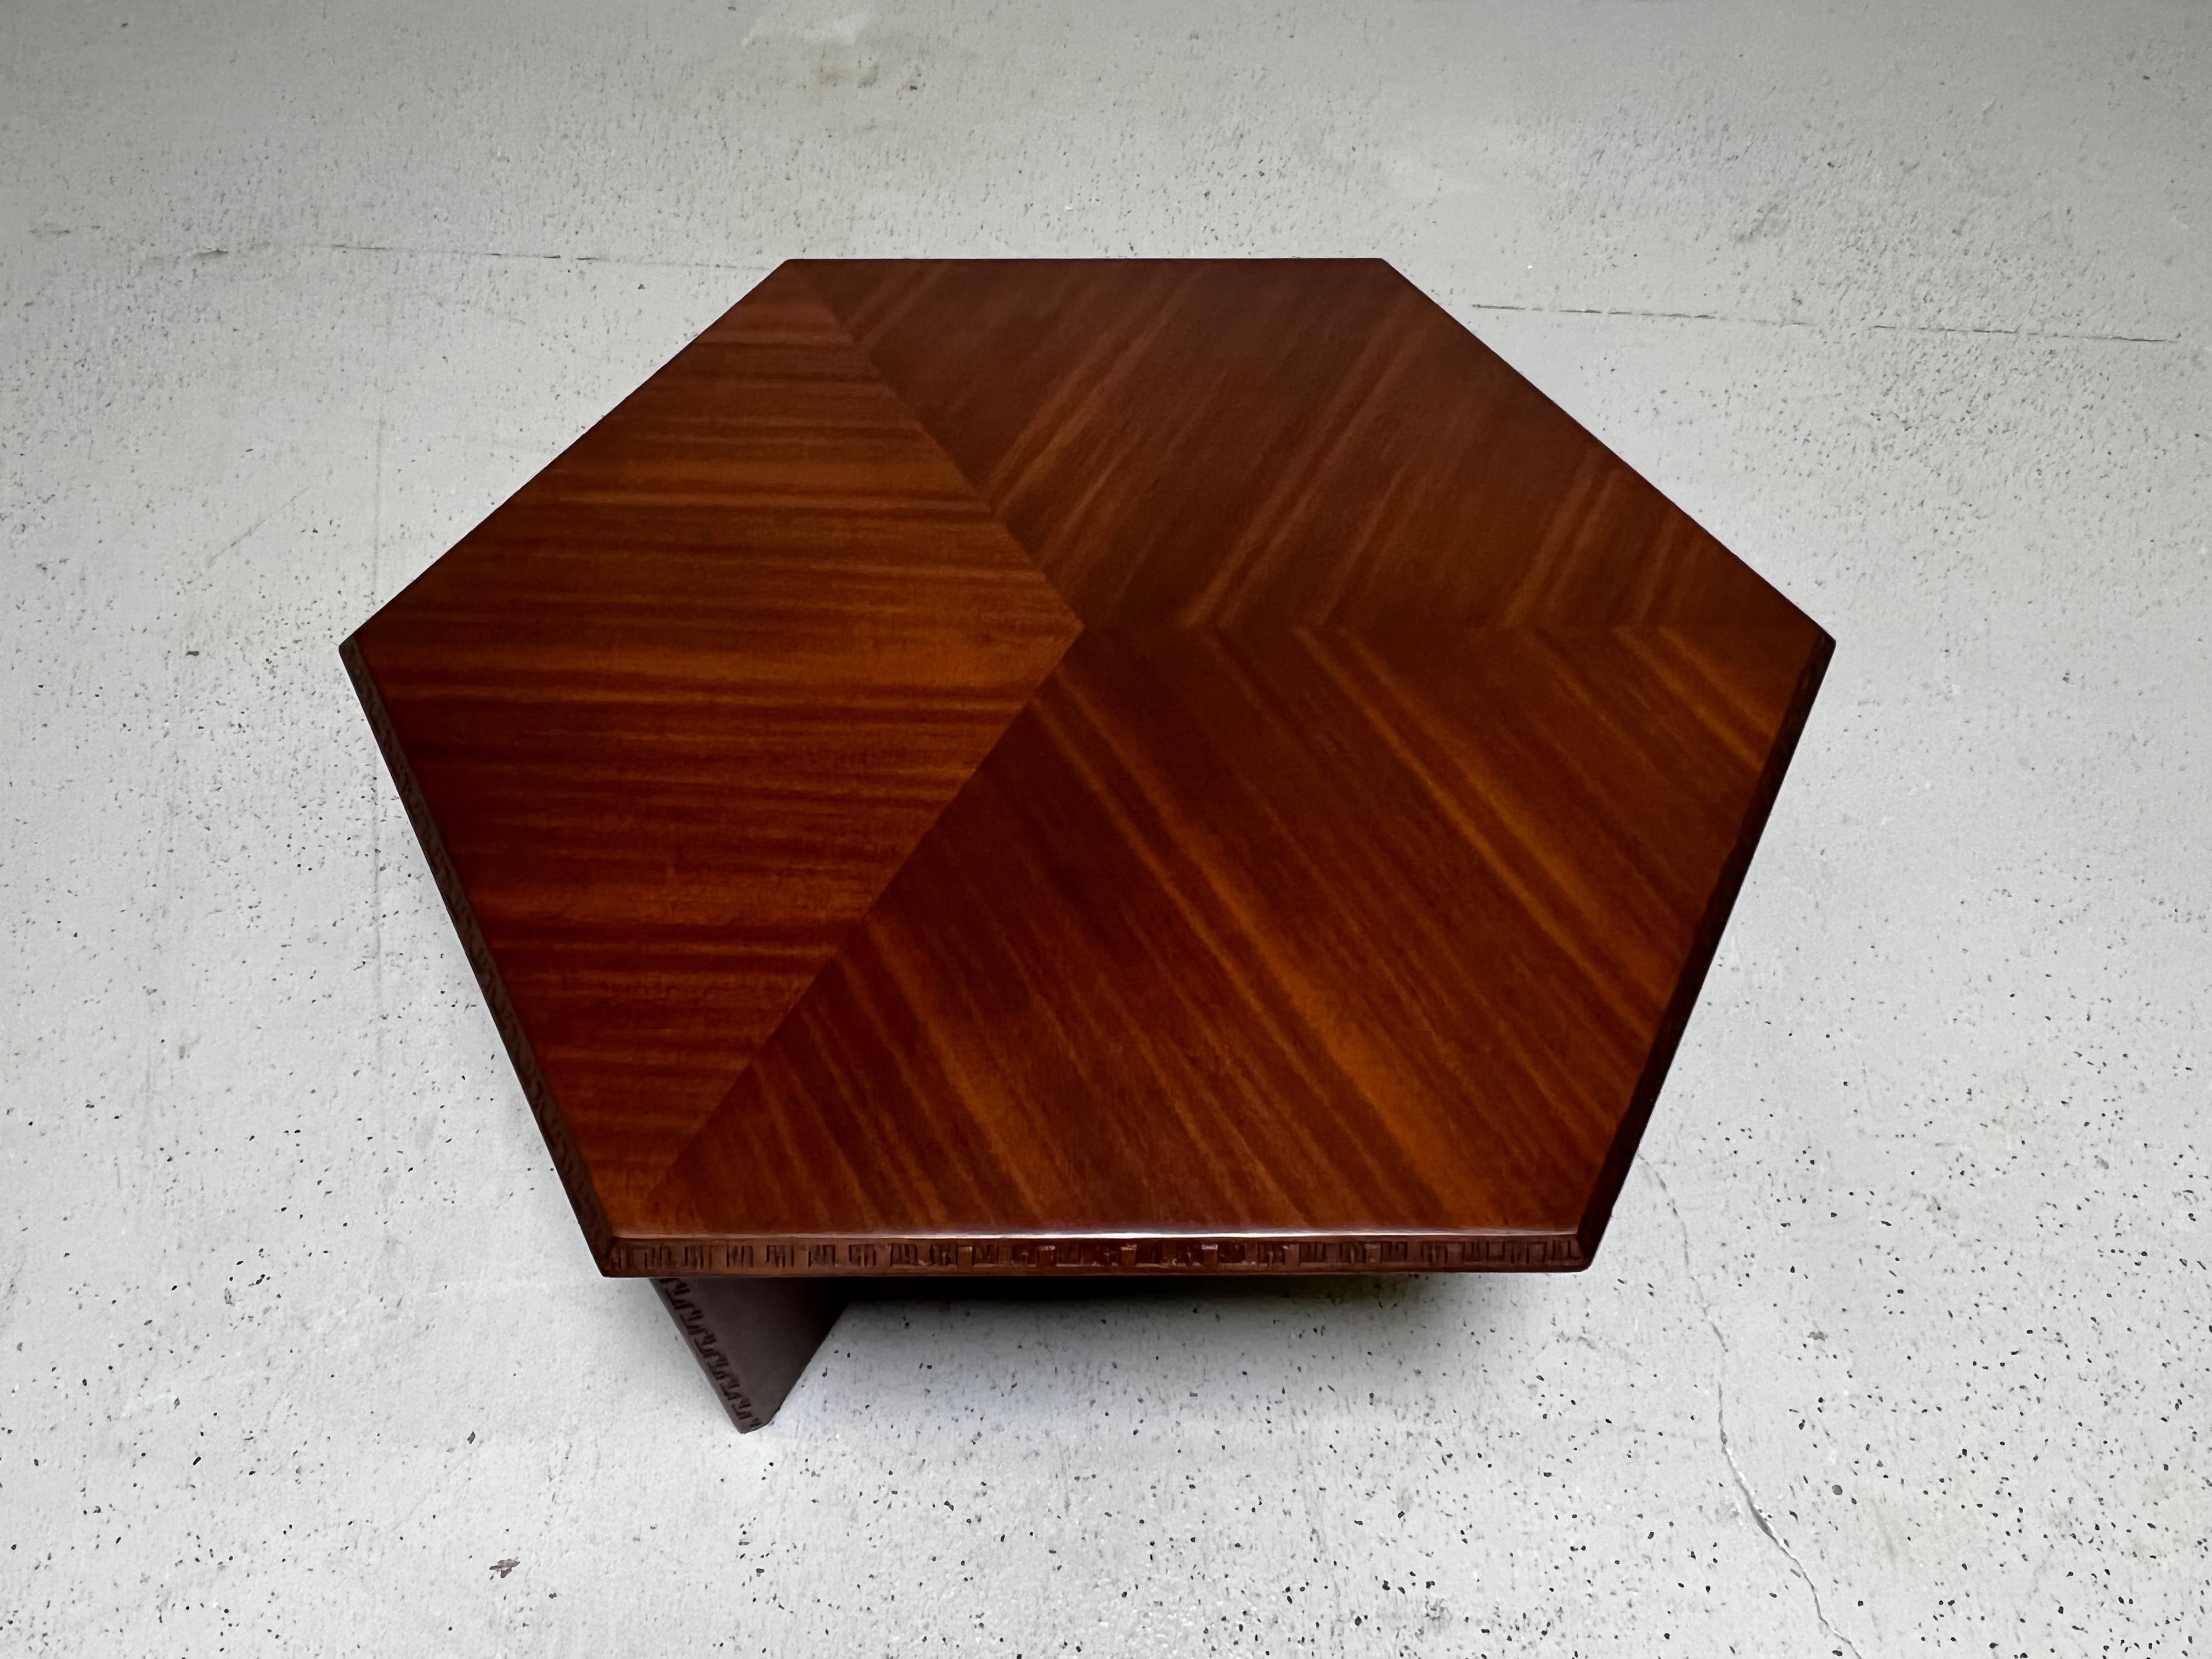 Hexagonal Taliesin Coffee Table by Frank Lloyd Wright for Henredon For Sale 2